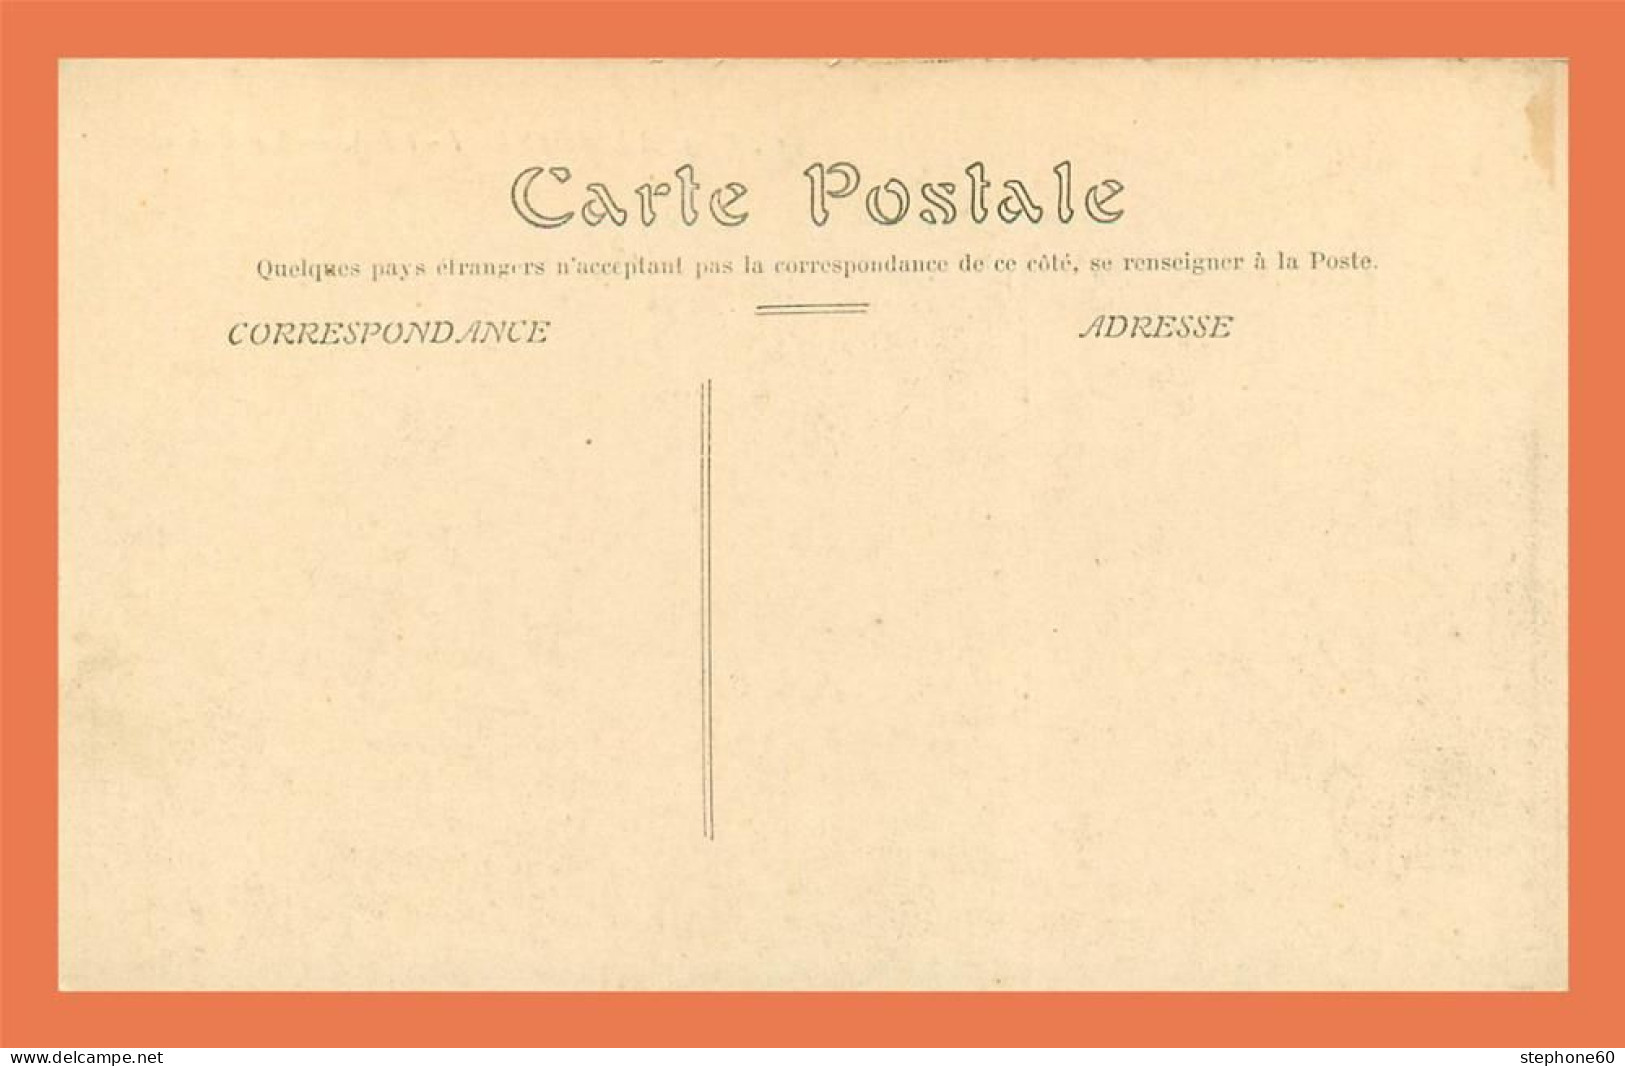 A710 / 093 37 - AMBOISE Chateau - Amboise